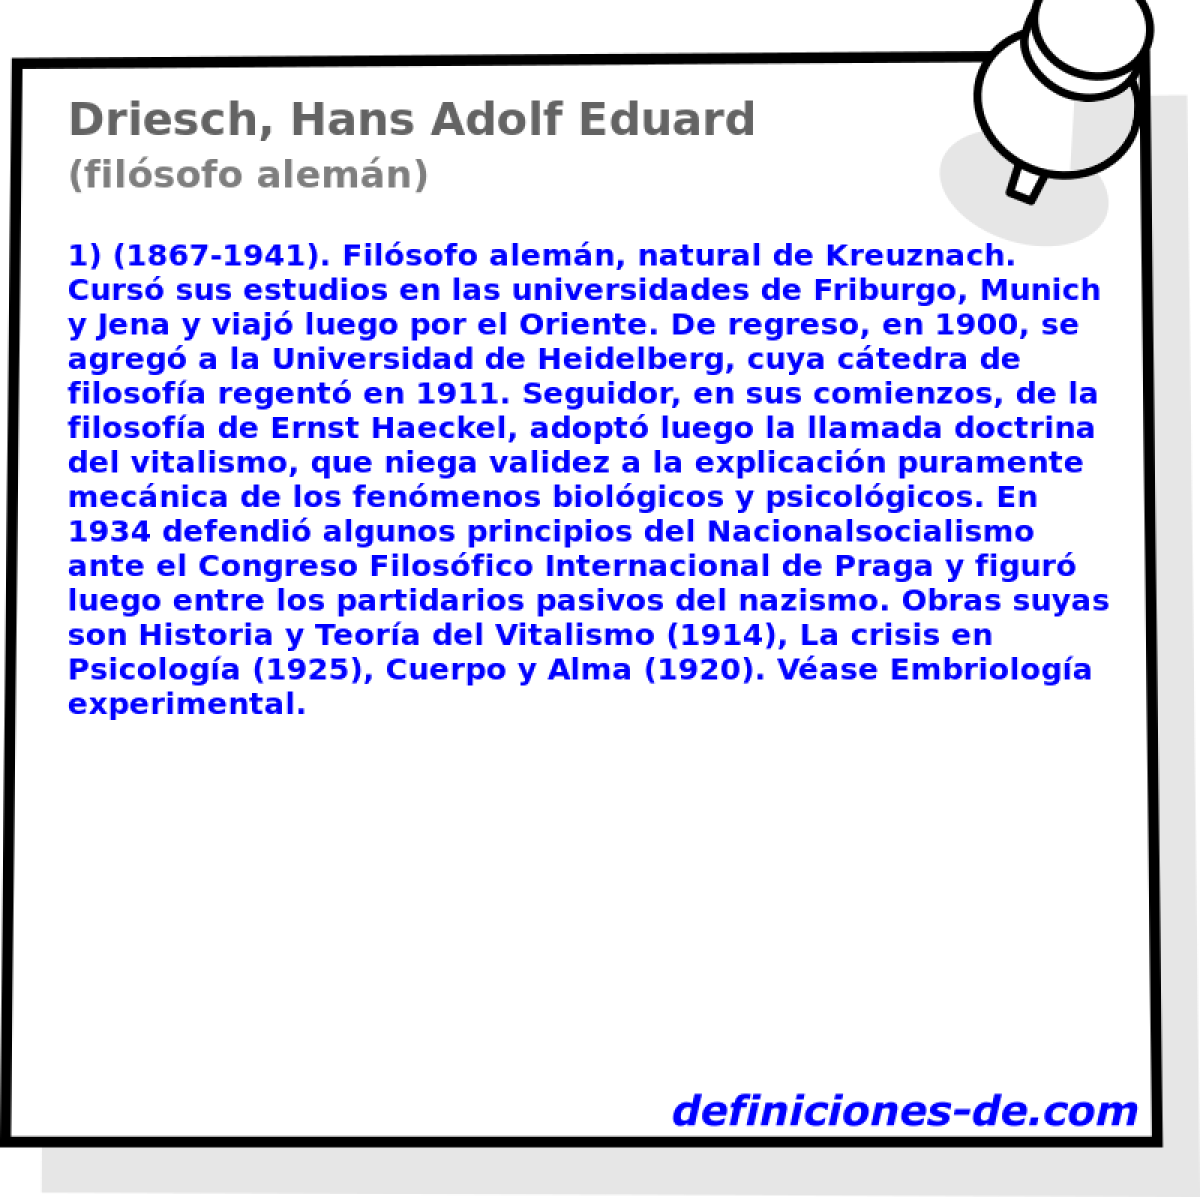 Driesch, Hans Adolf Eduard (filsofo alemn)